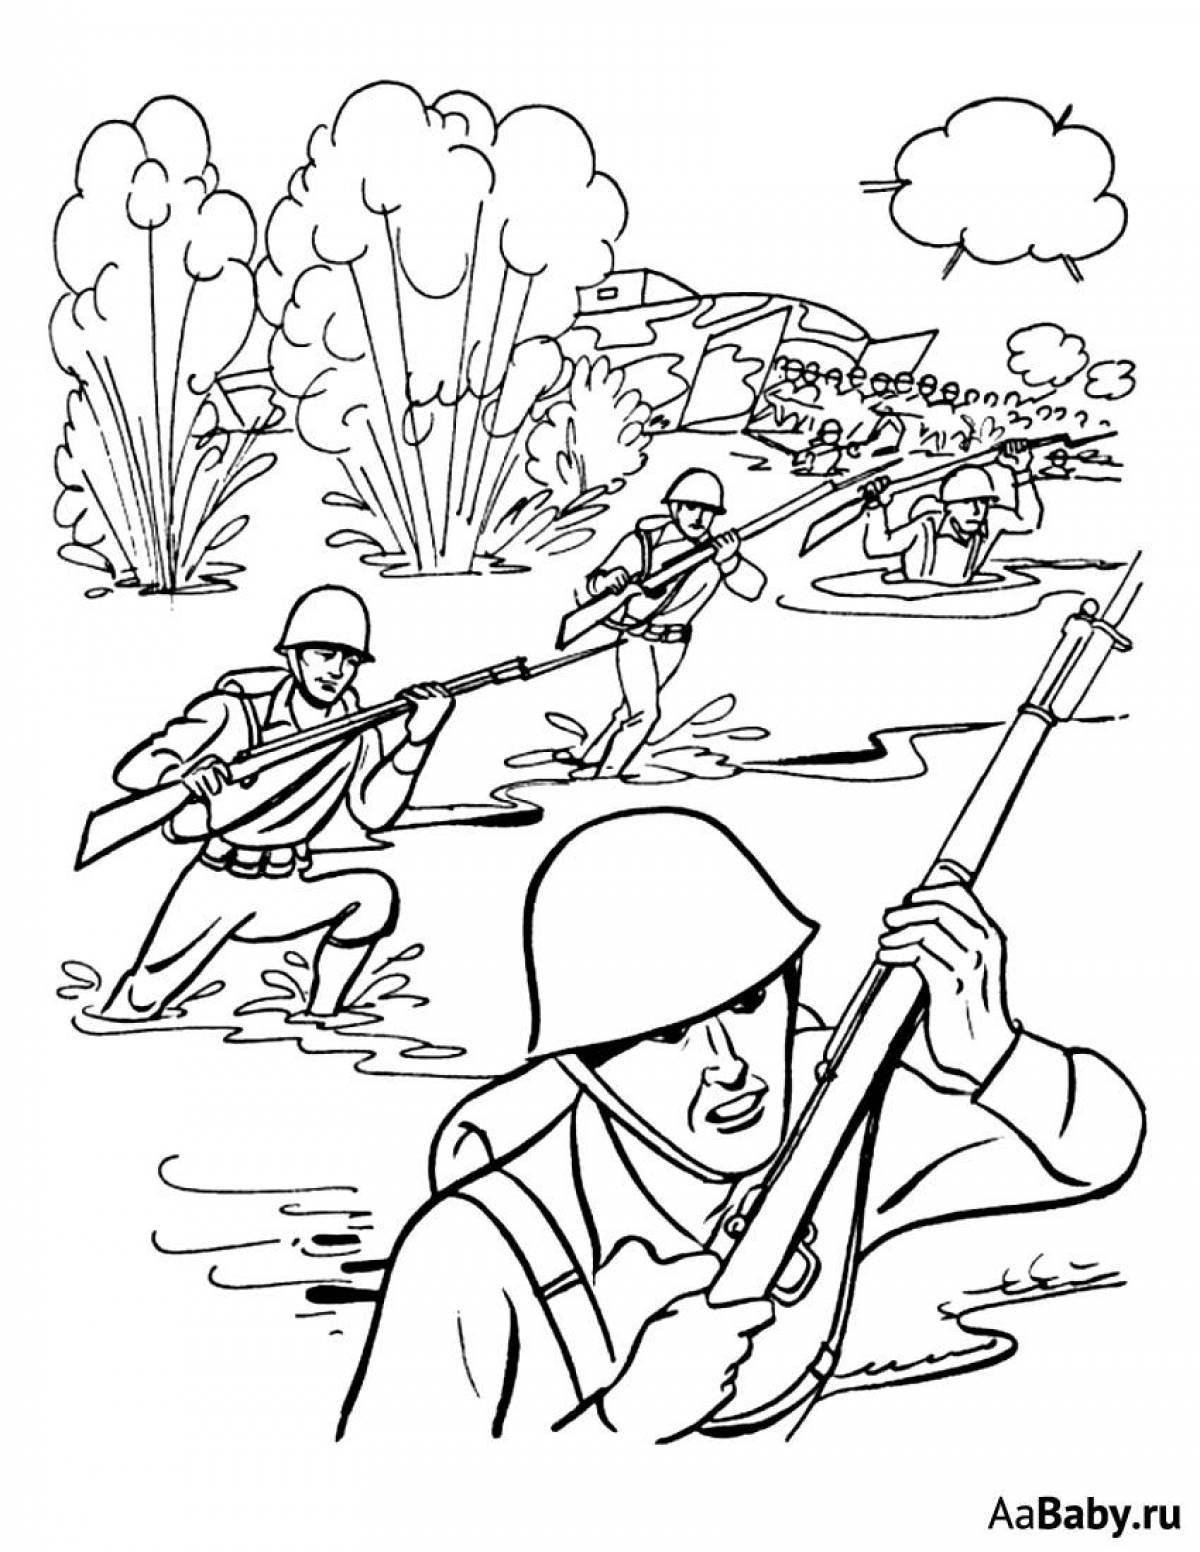 Battle of Stalingrad drawing #7